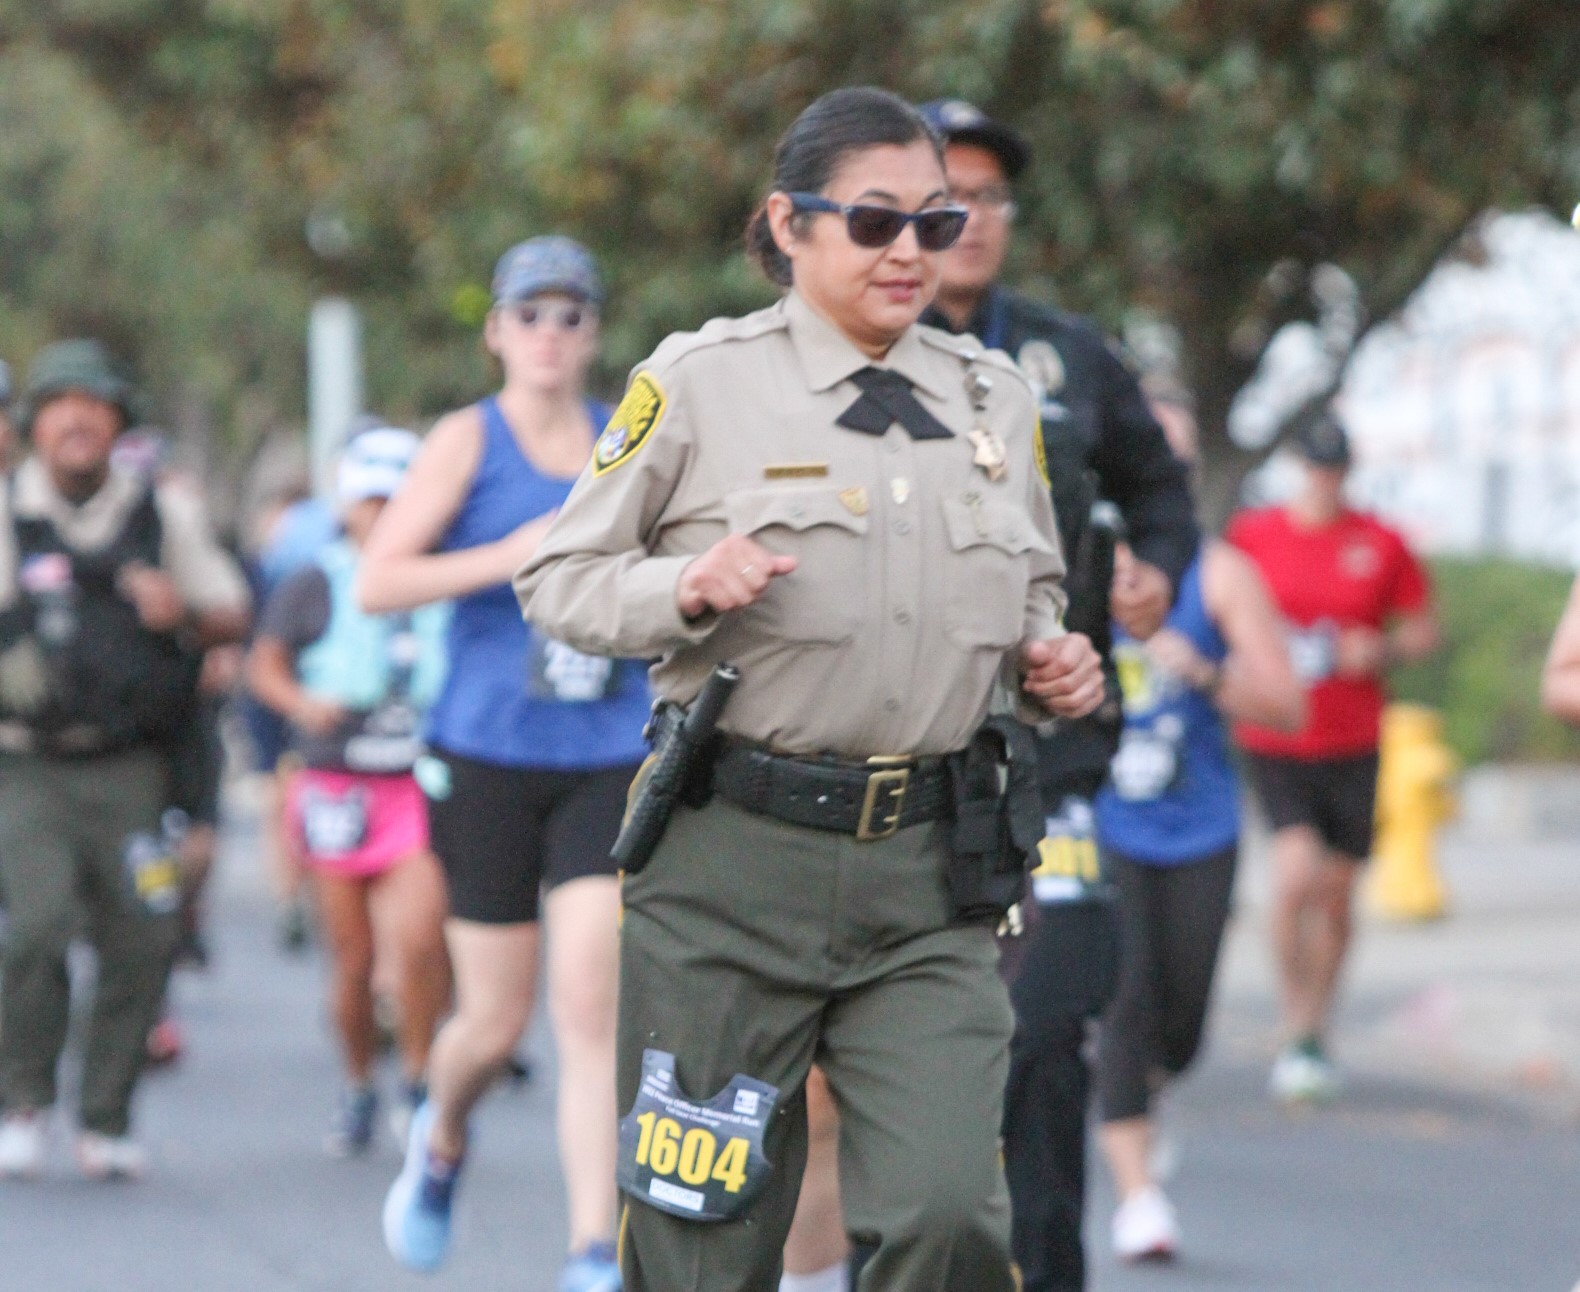 Woman running in uniform.